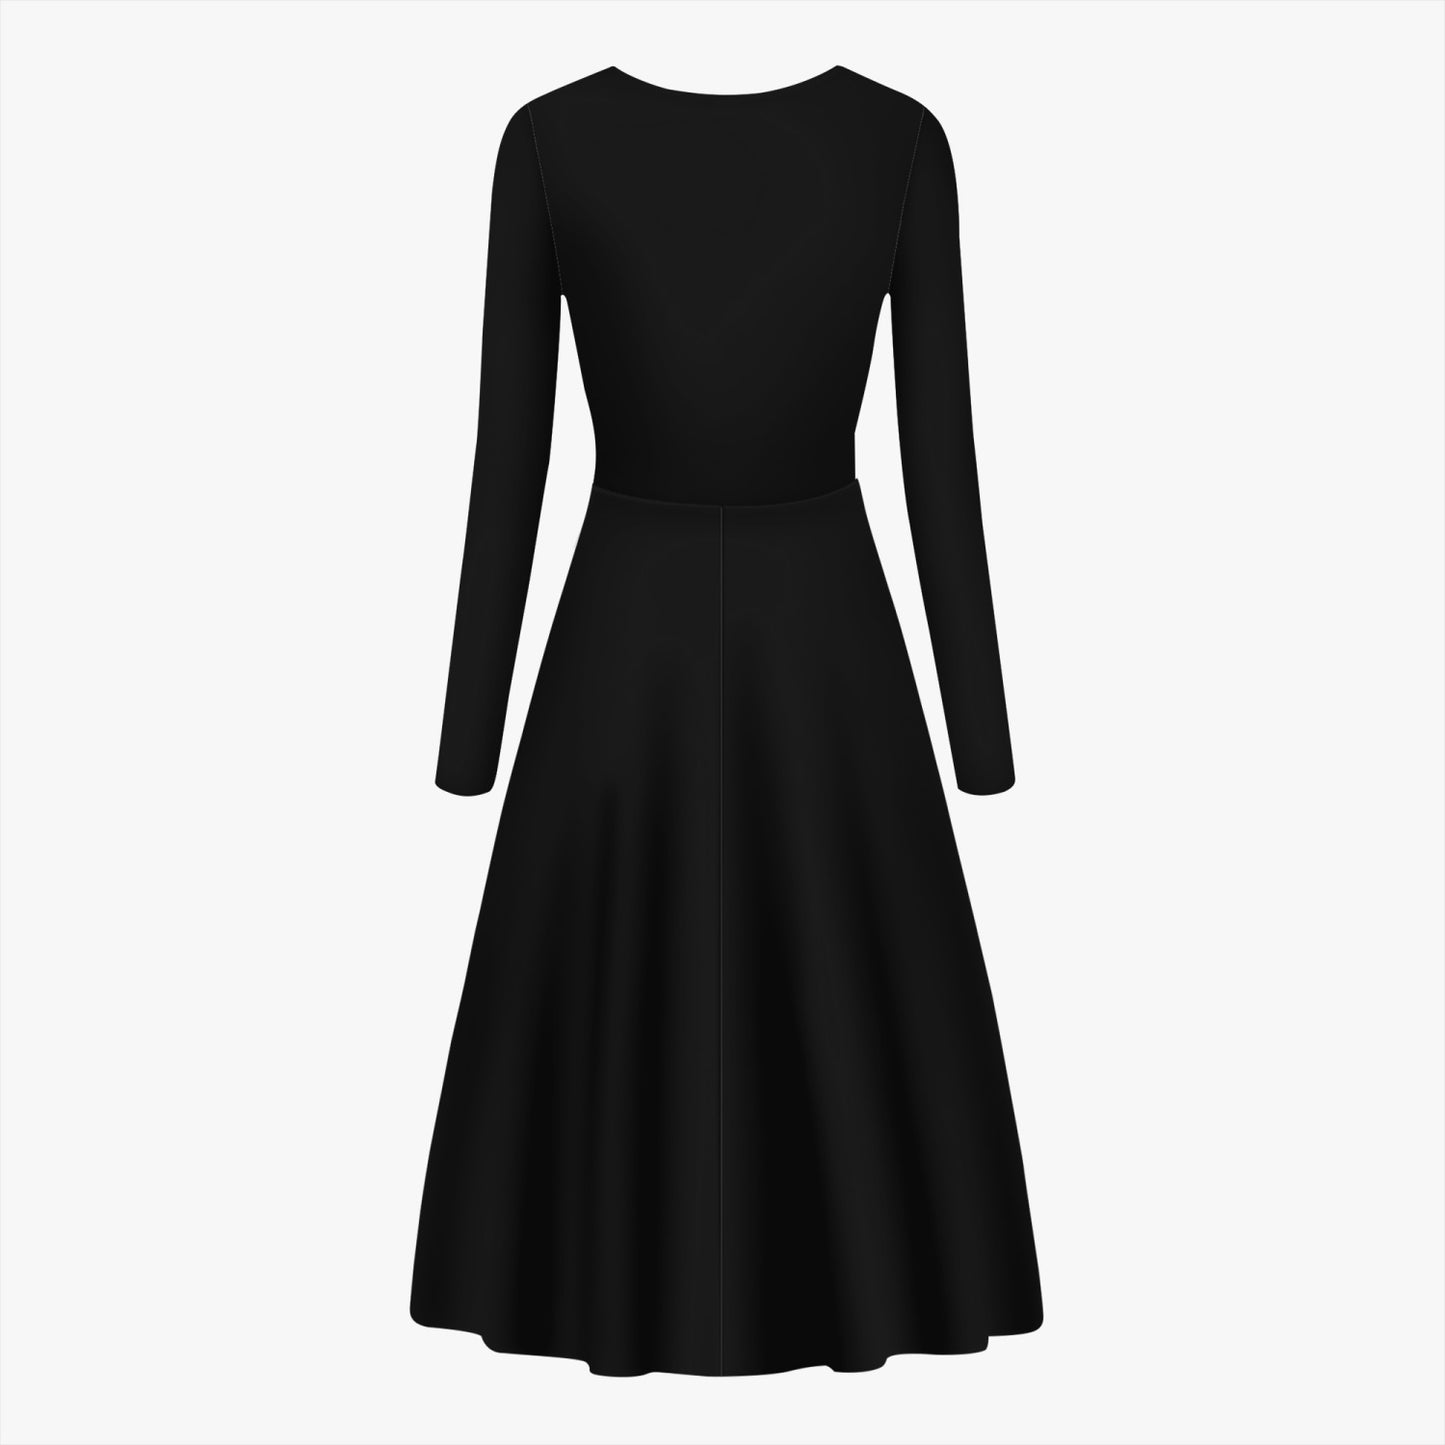 Solae Women's Long-Sleeve One-piece Dress (Black)